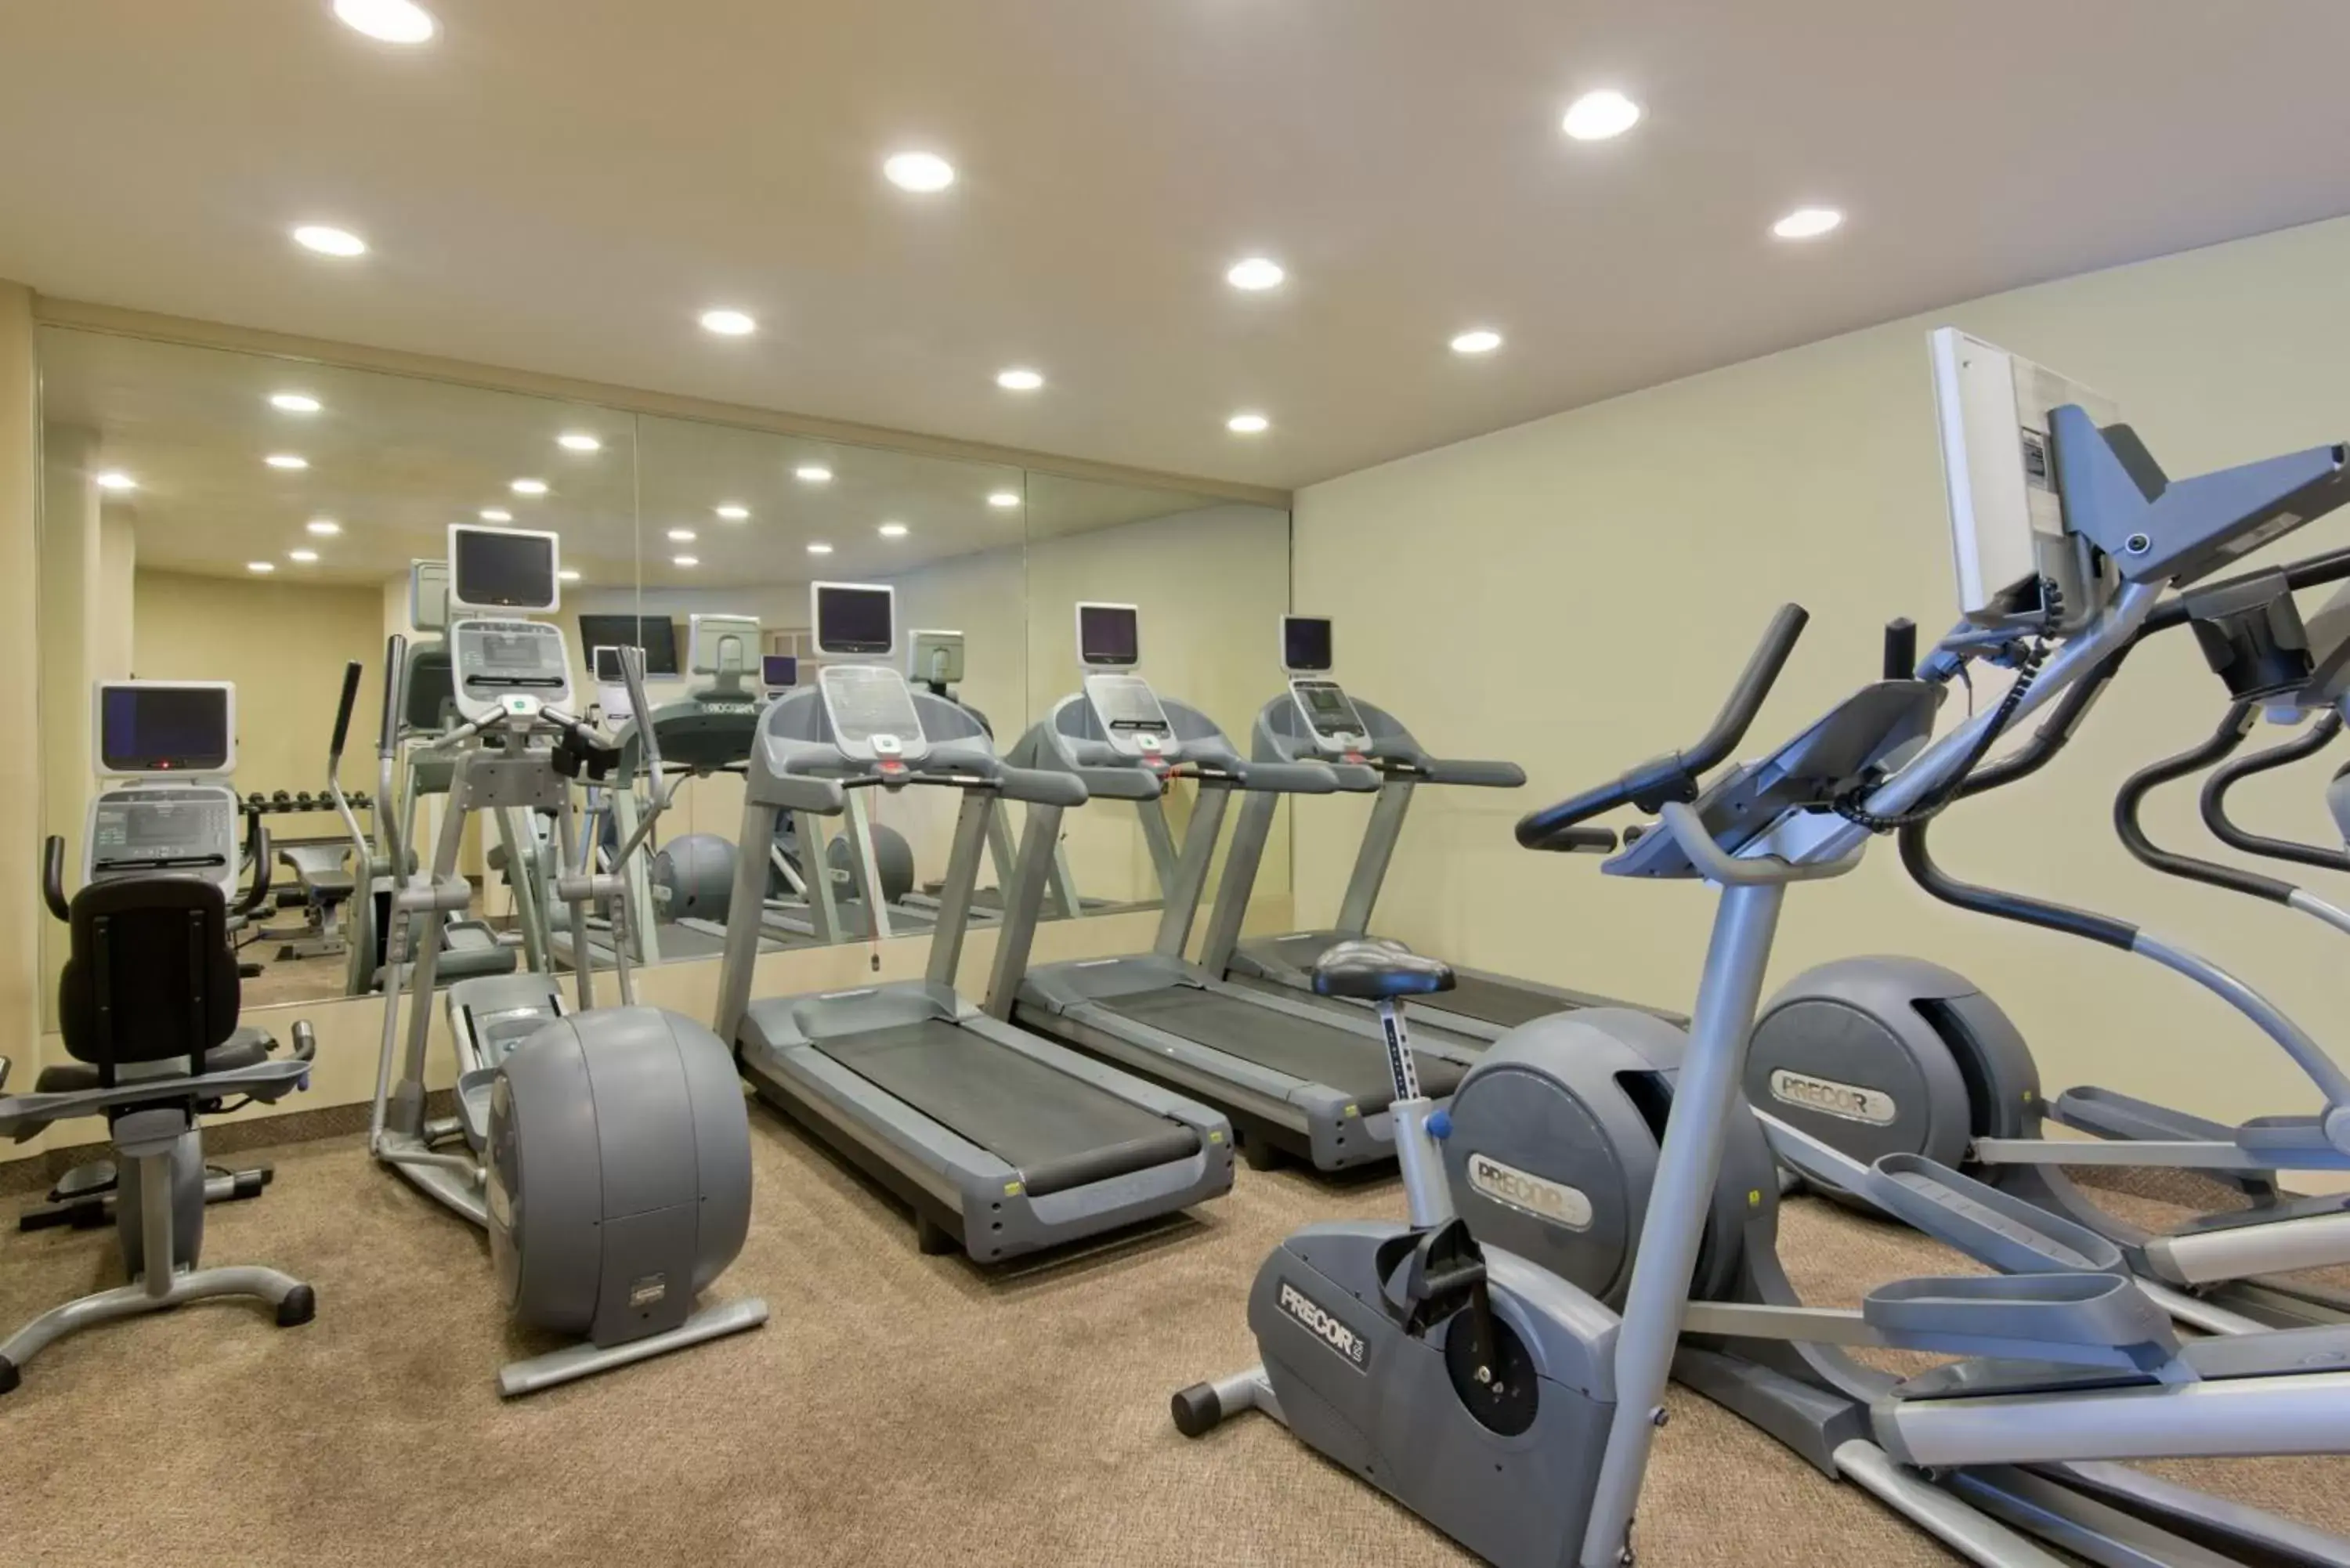 Fitness centre/facilities, Fitness Center/Facilities in Crowne Plaza Albuquerque